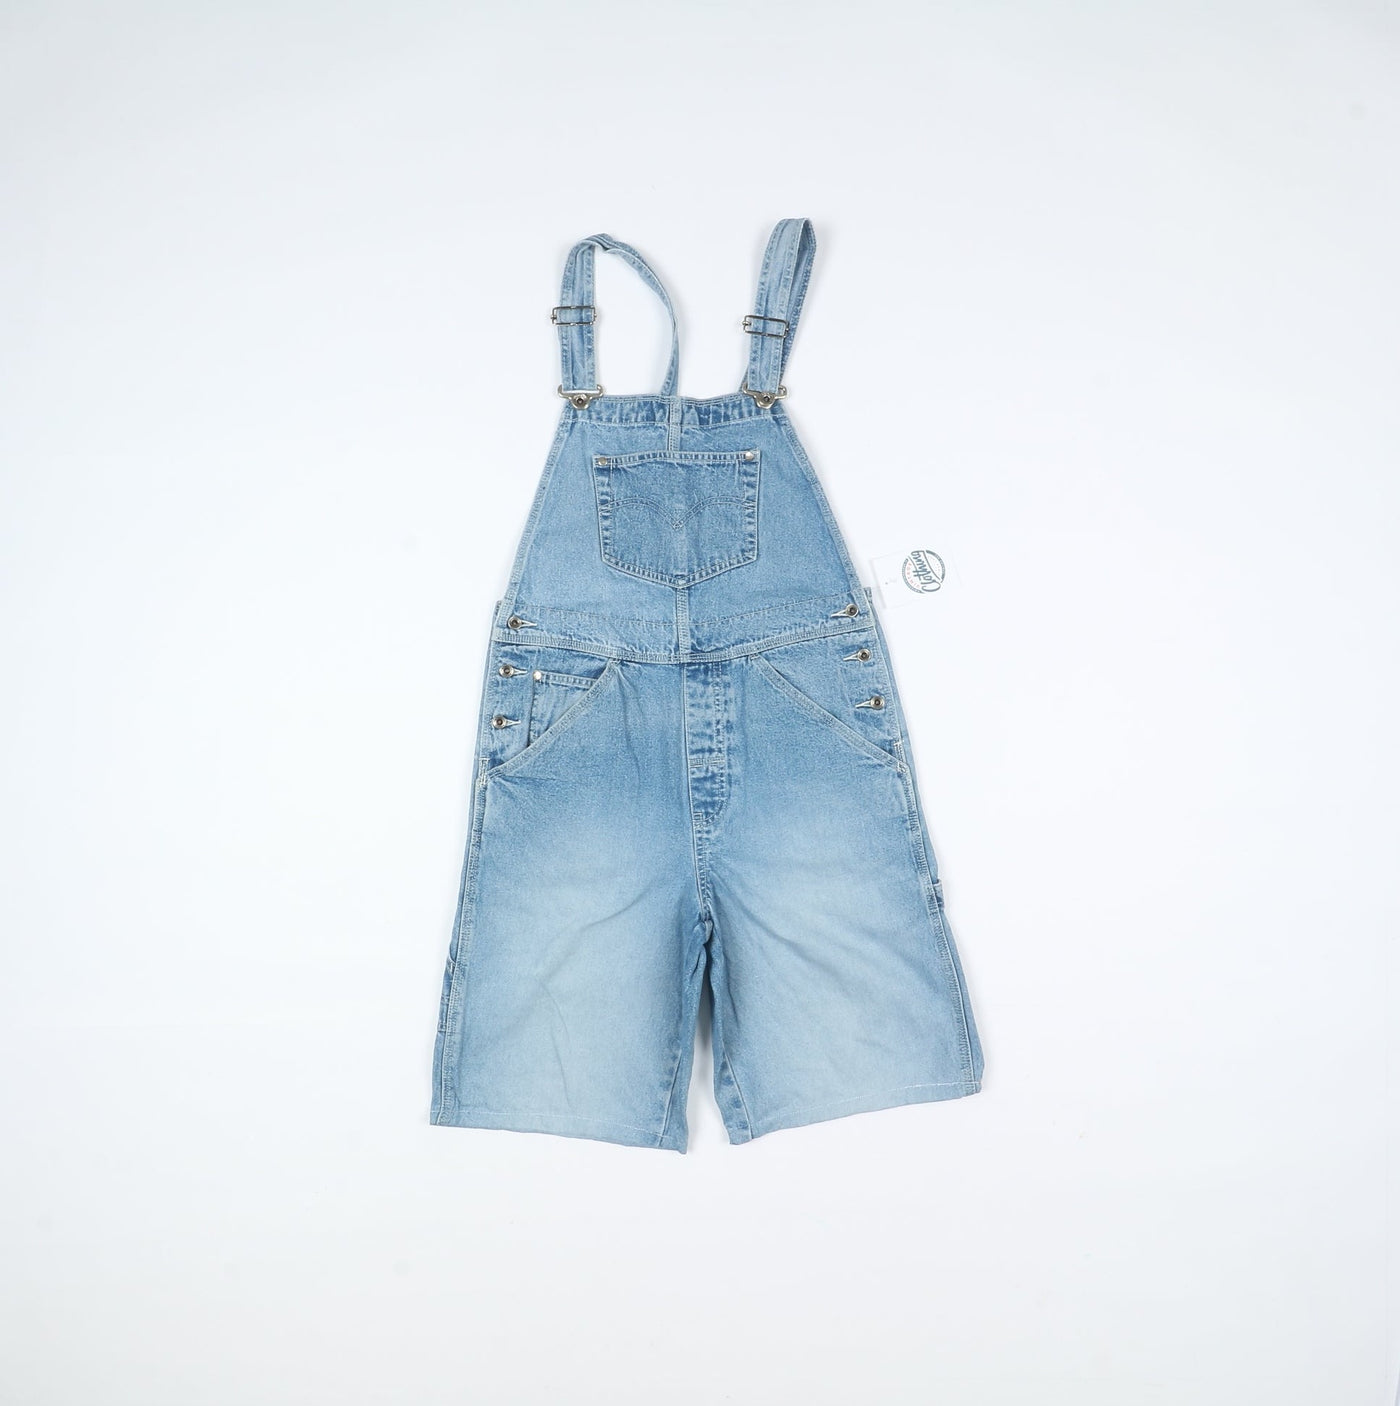 Levi's Silver Tab Salopette Short di Jeans Denim Taglia S Unisex